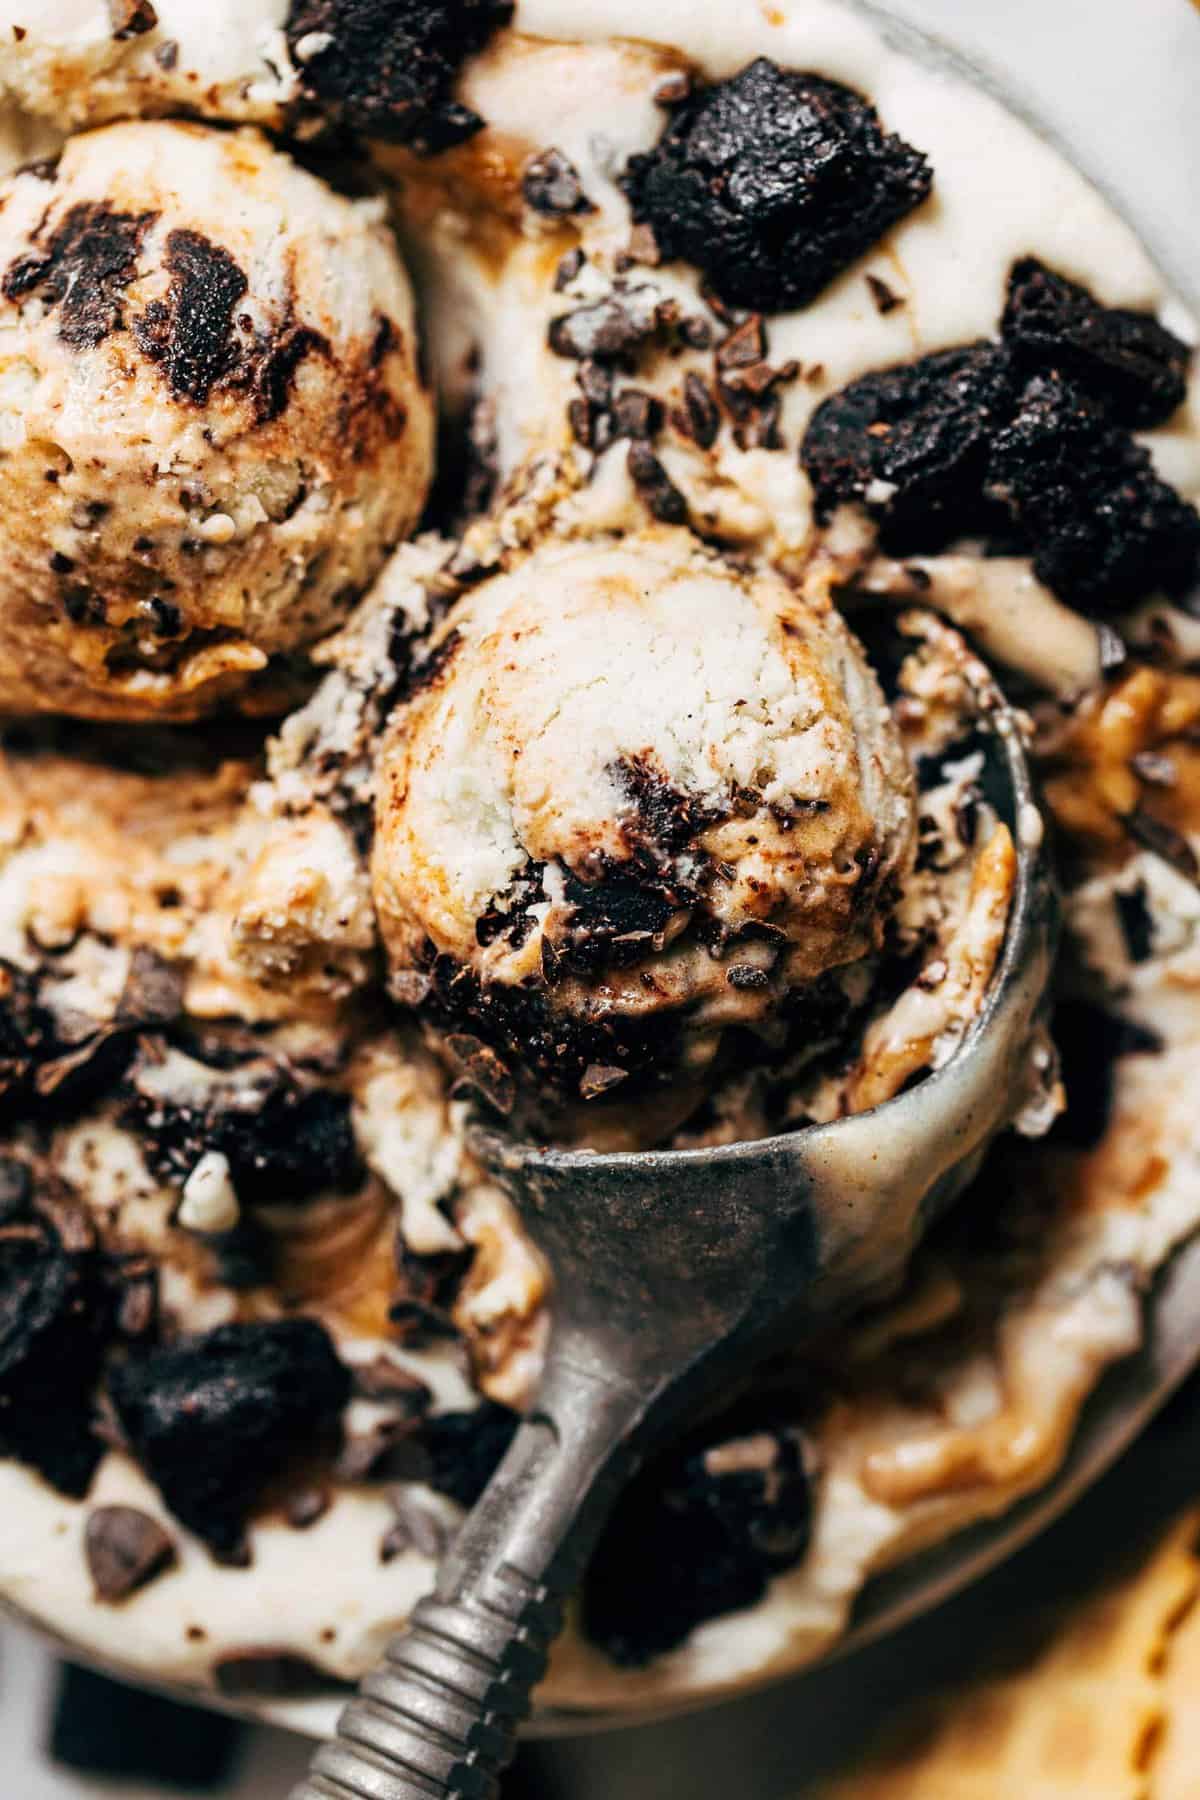 https://butternutbakeryblog.com/wp-content/uploads/2021/08/no-churn-vegan-ice-cream-scooped-close-up.jpg